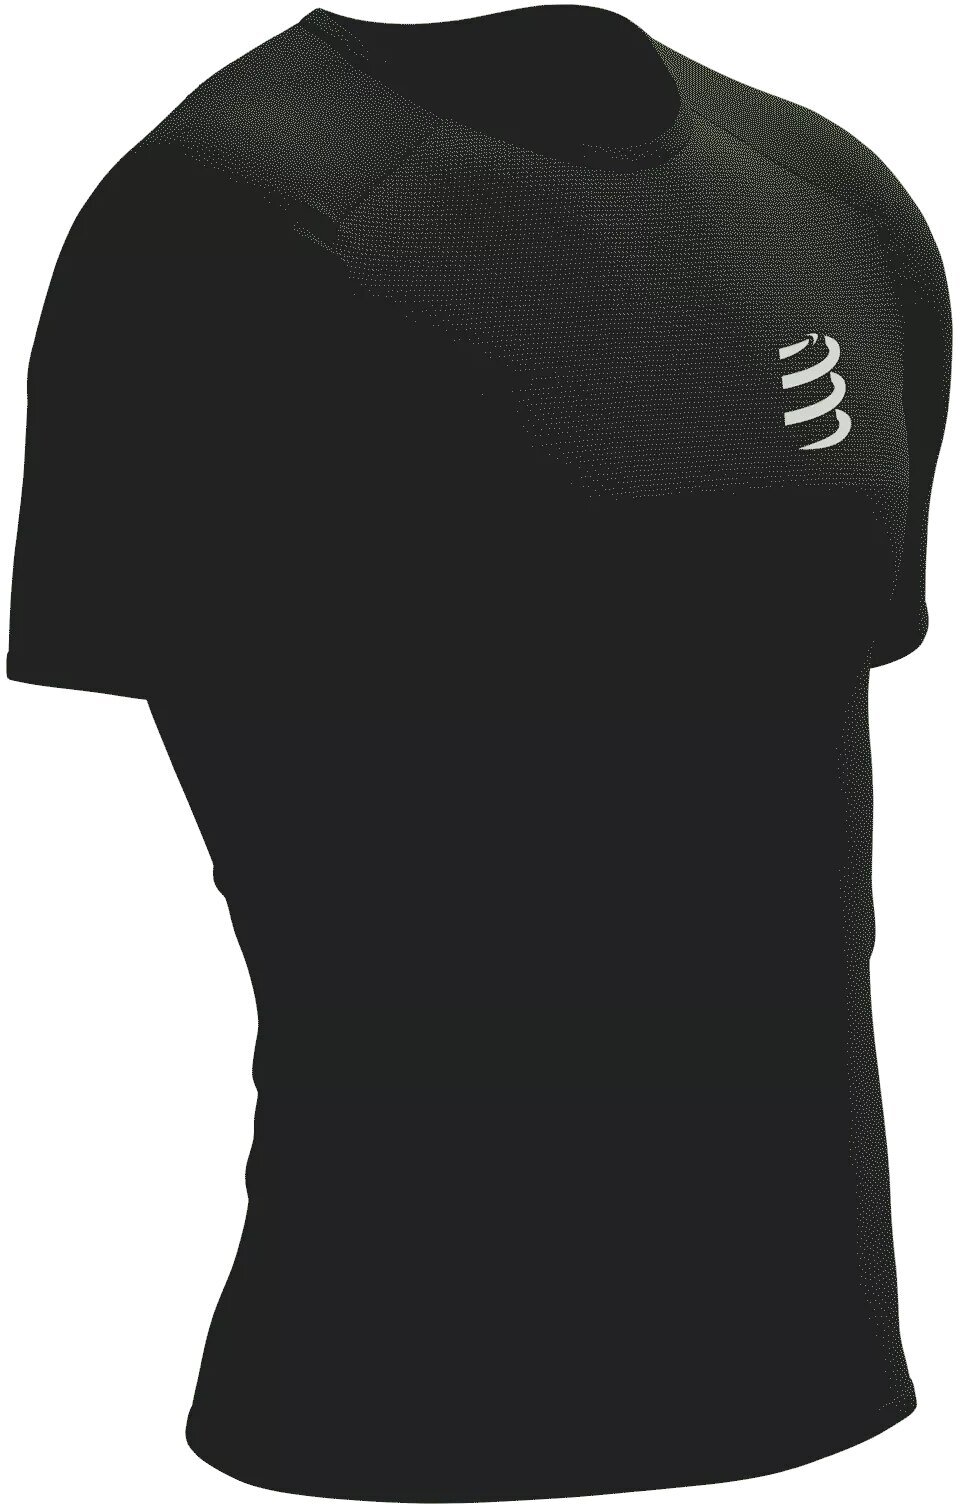 Running t-shirt with short sleeves
 Compressport Performance SS Tshirt M Black/White S Running t-shirt with short sleeves